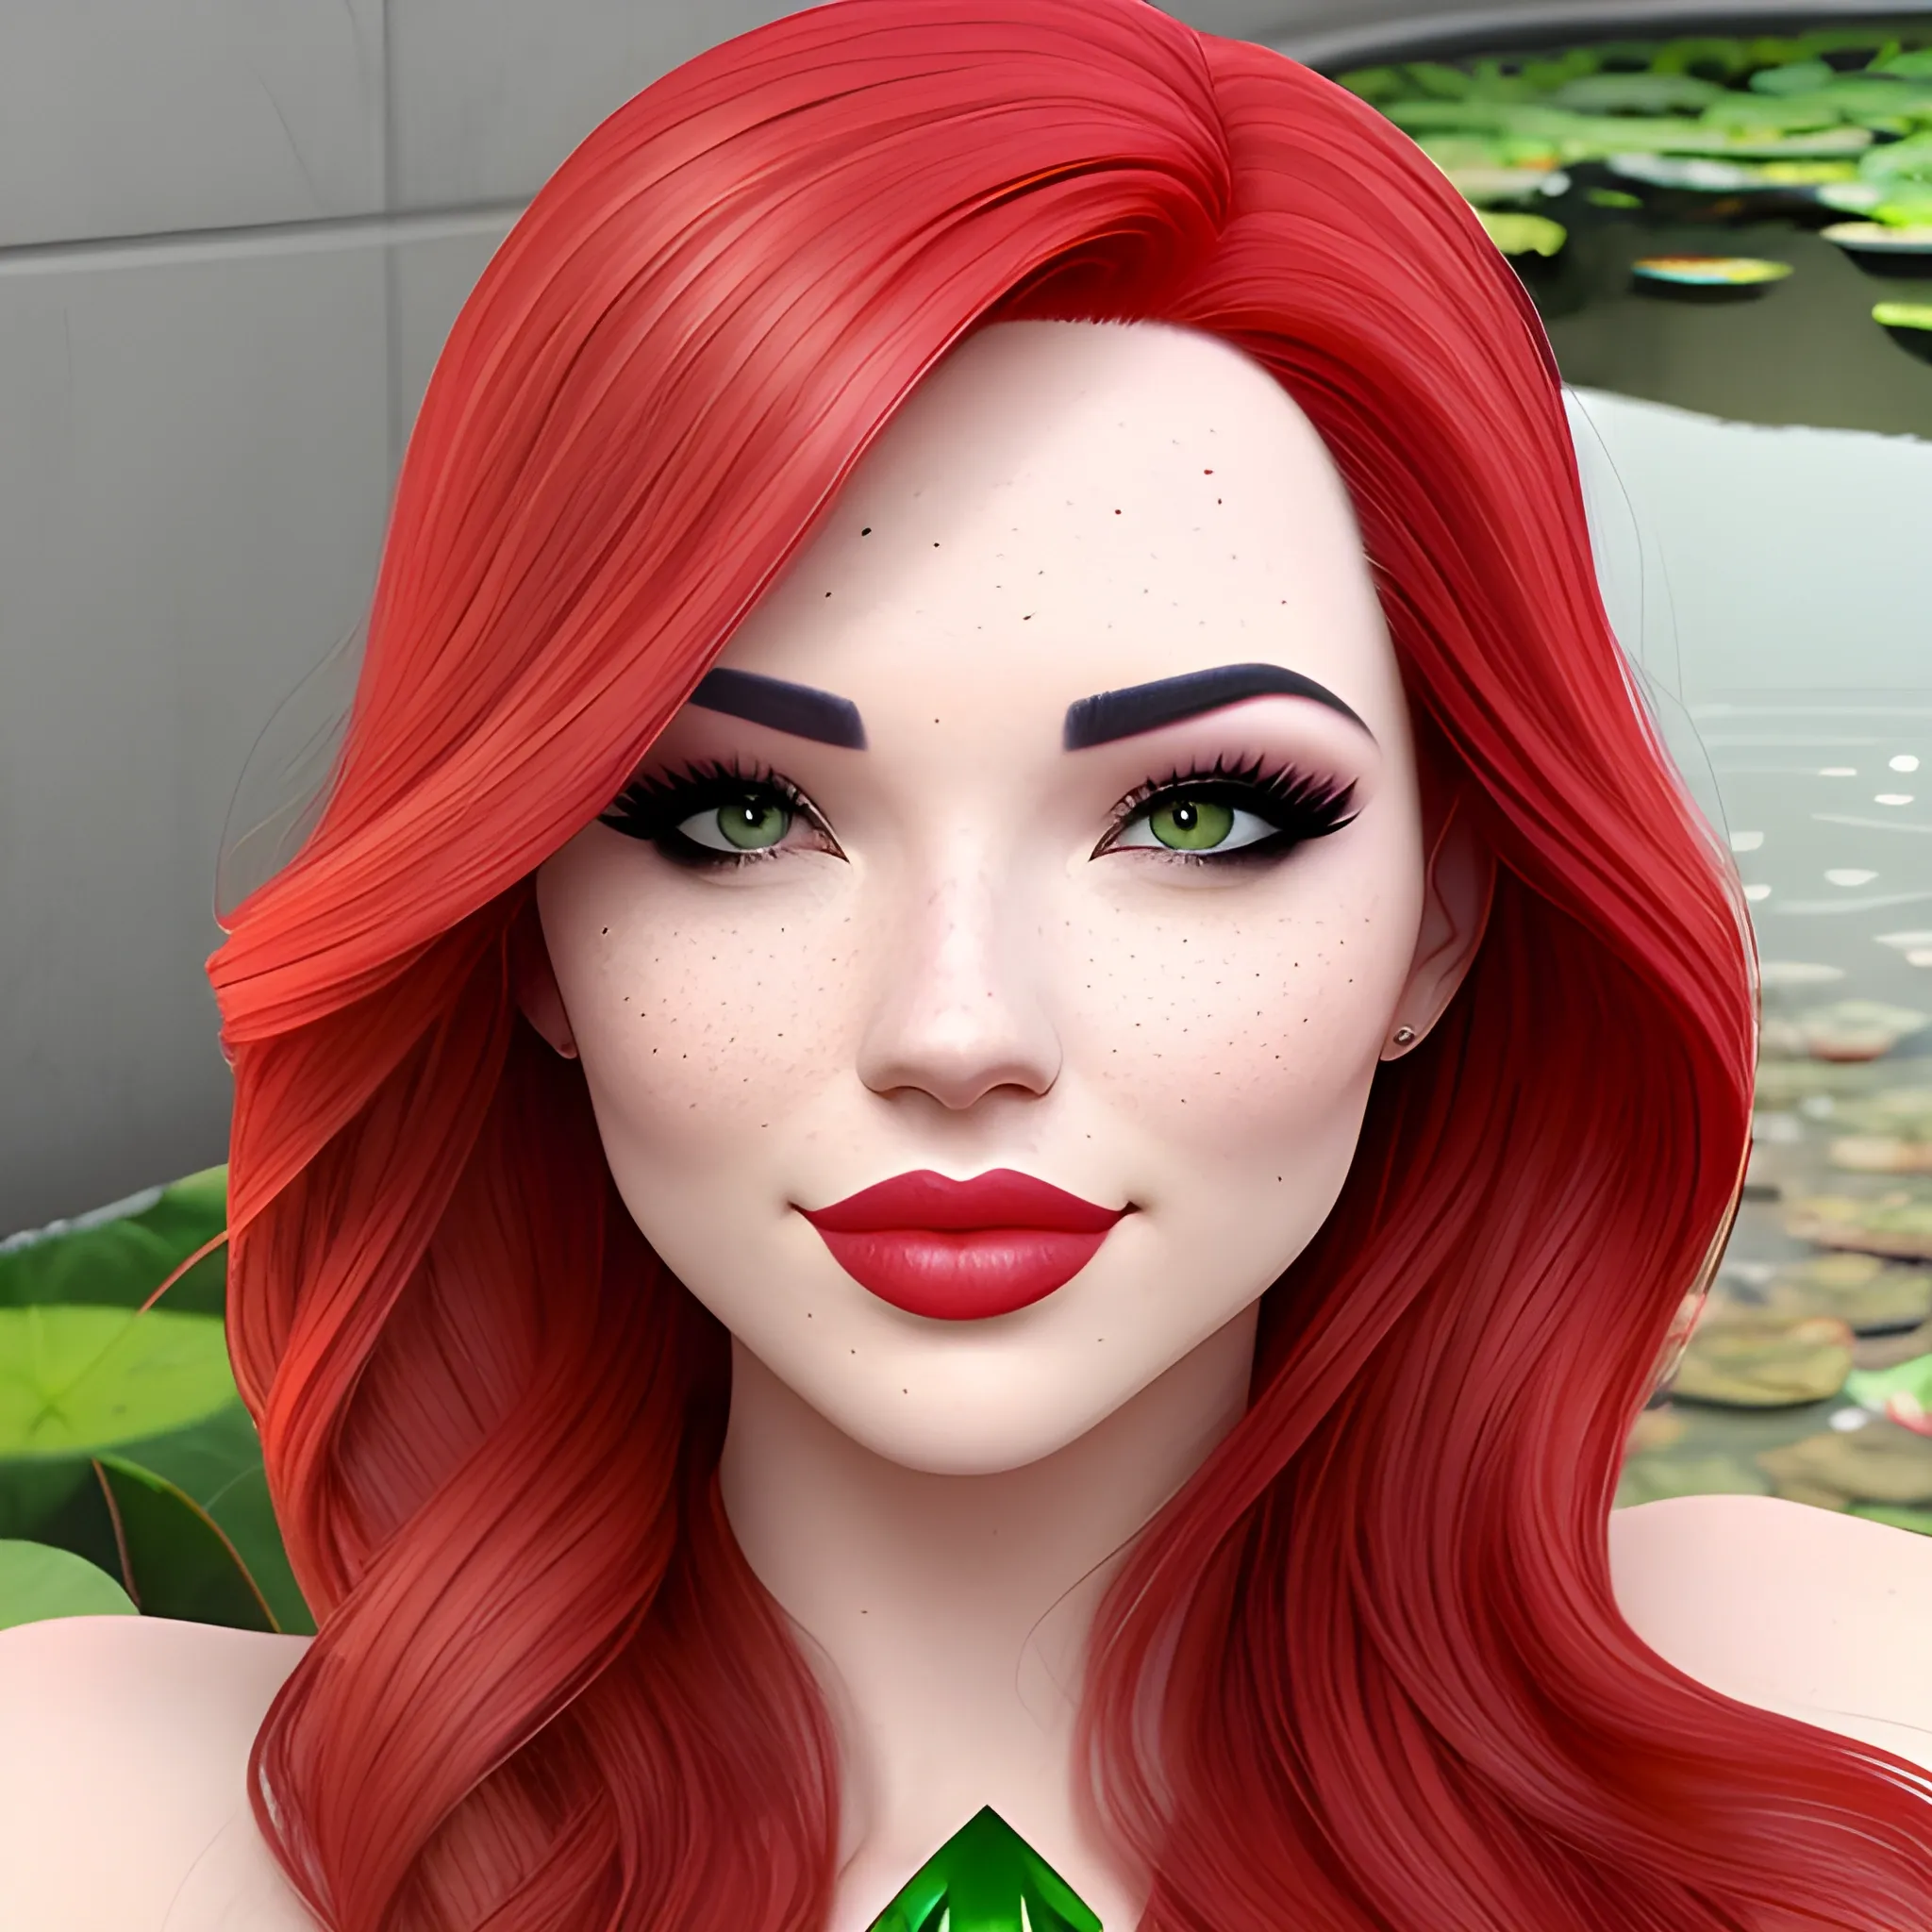 Shanina Shaik / Dove Cameron face morph, 3D, red hair, green eyes, freckles, lotus pond